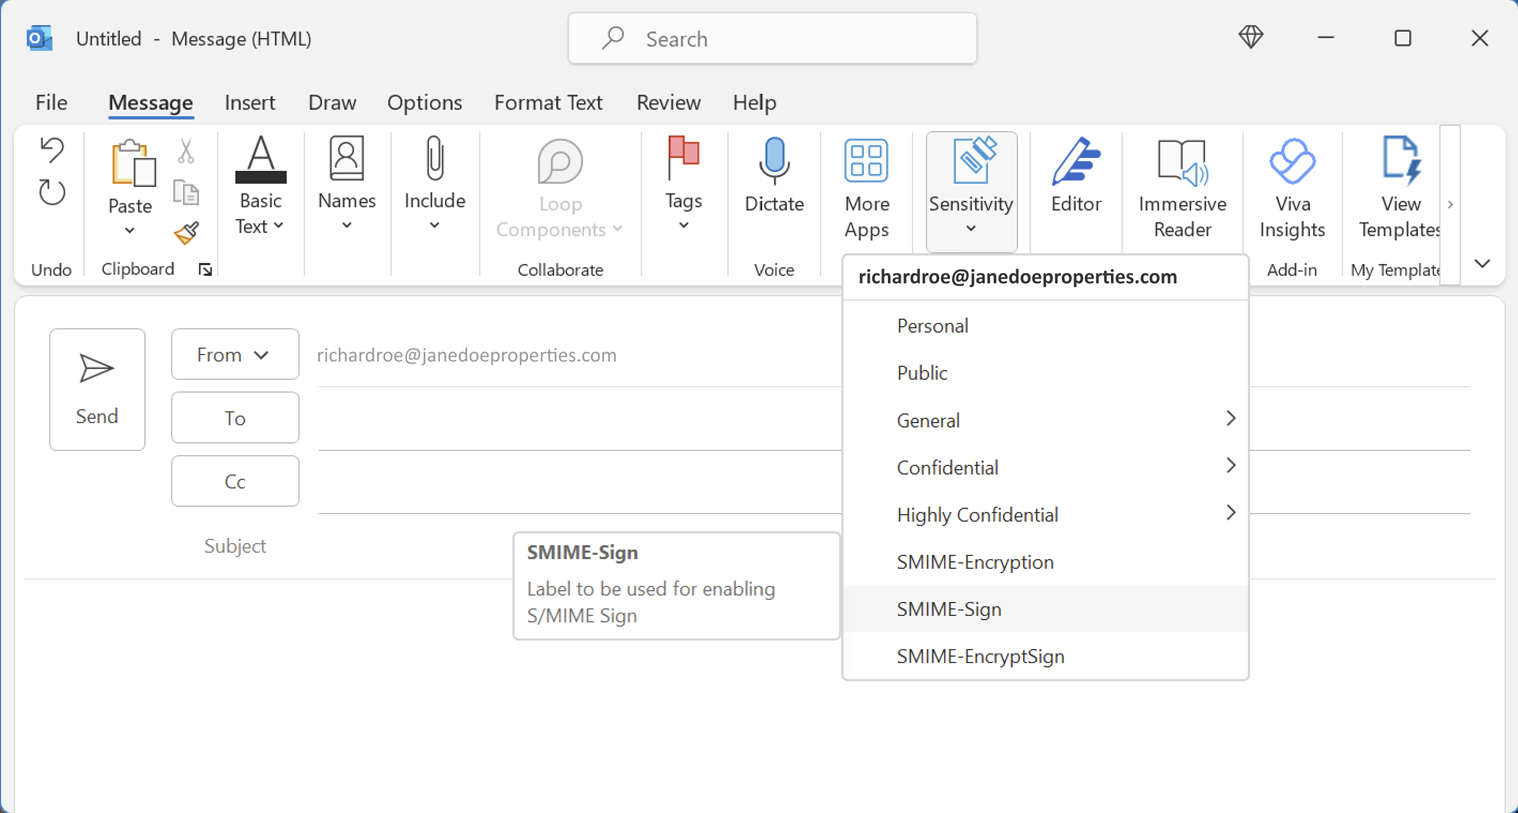 Dropdown menu of new sensitivity labels visible in Outlook